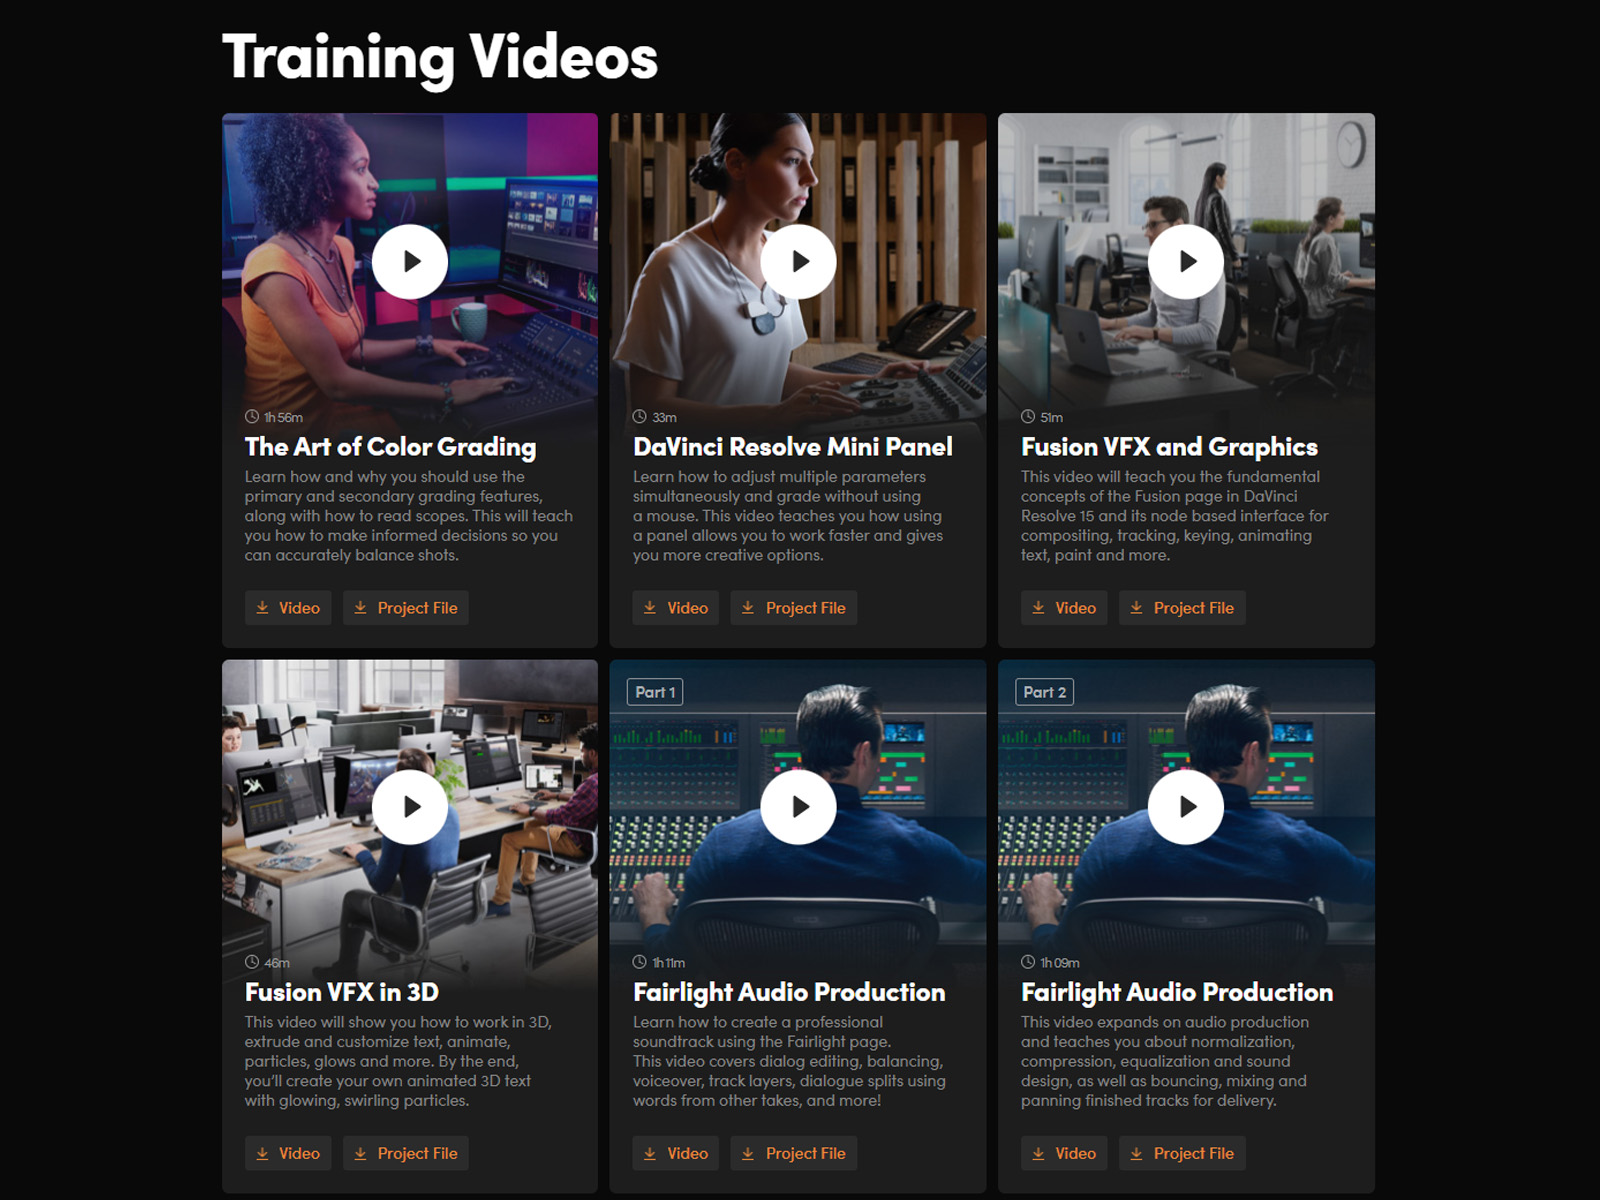 Blackmagic Design’s training portal has some great resources.